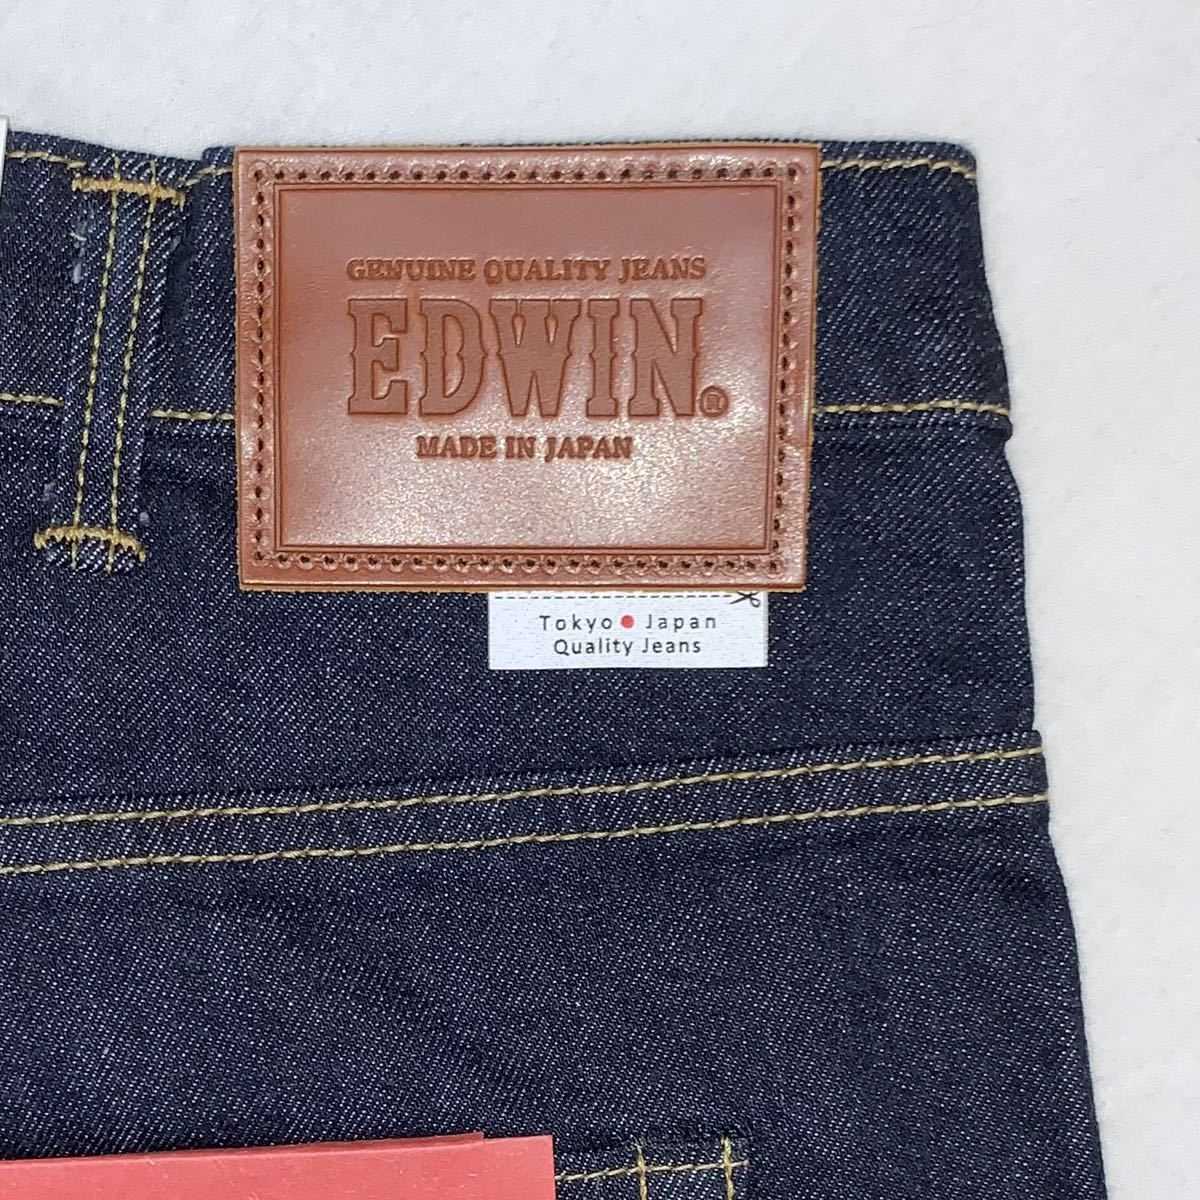  Edwin regular tapered Denim pants W44 EDWIN REGULAR TAPERD made in Japan large size ED33-1100